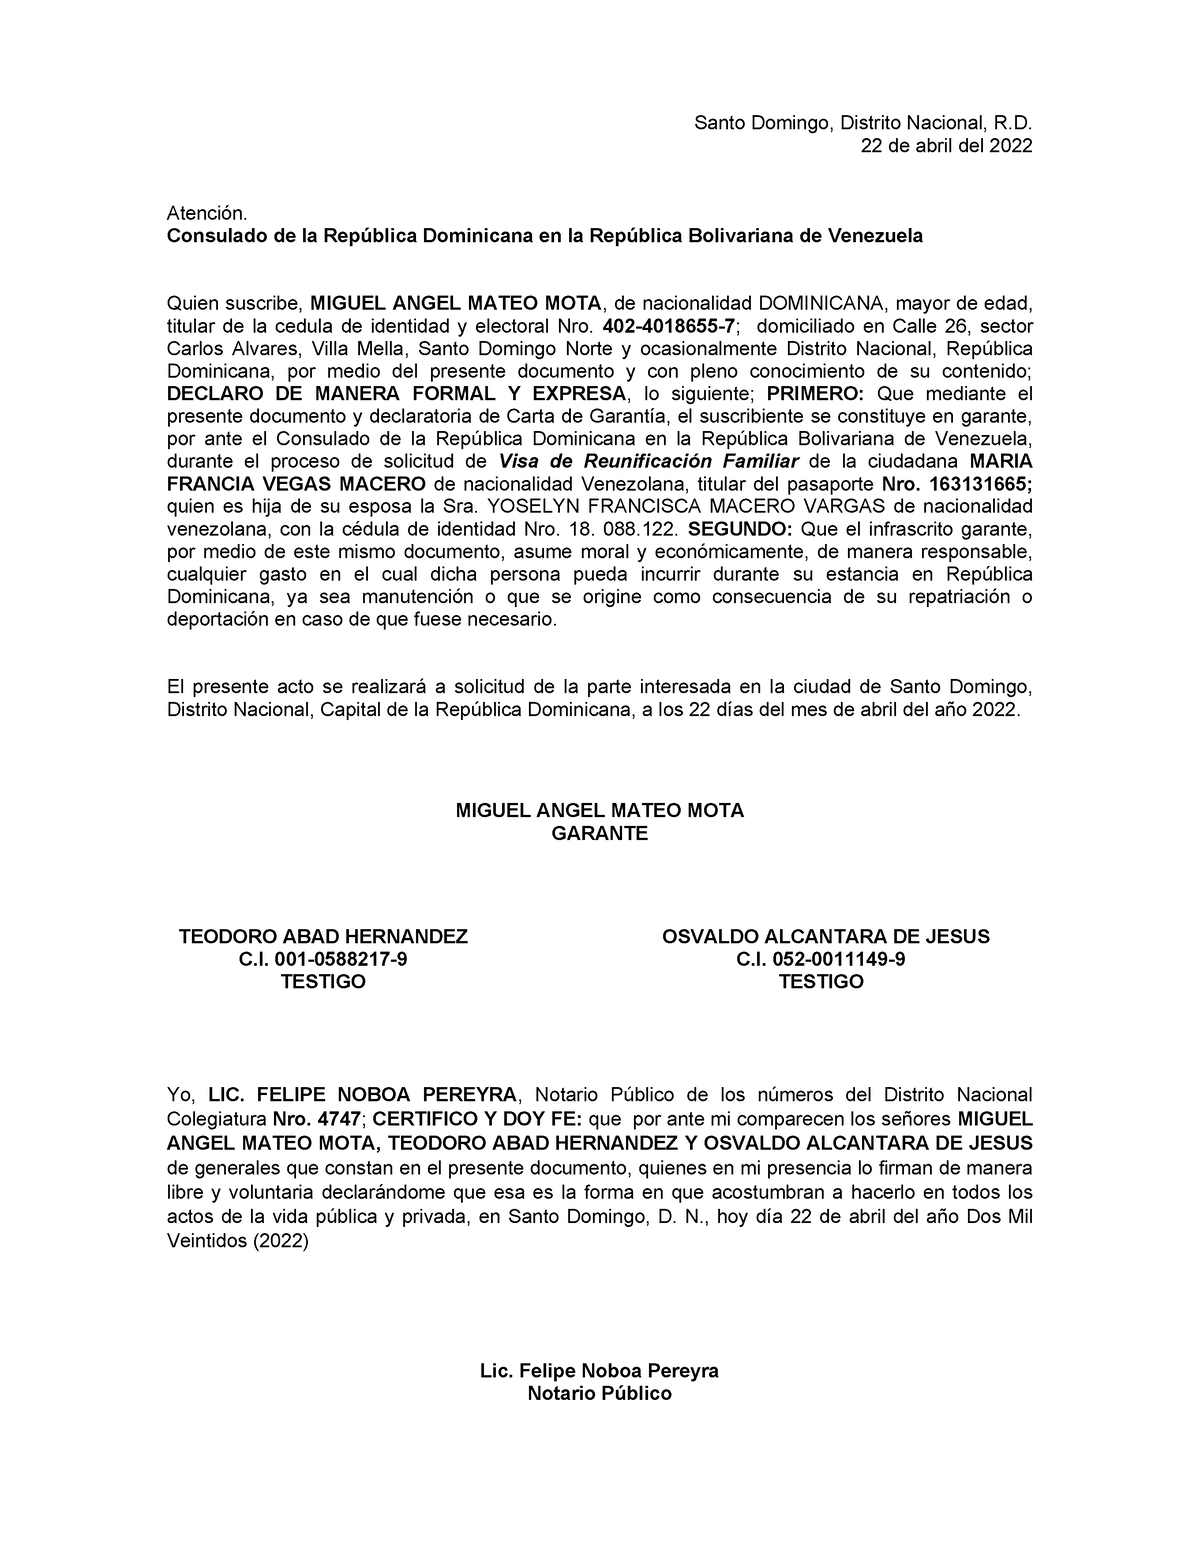 Carta Garante Visa Reunificacion Familiar - Maria Francia Vegas Macero -  Santo Domingo, Distrito - Studocu